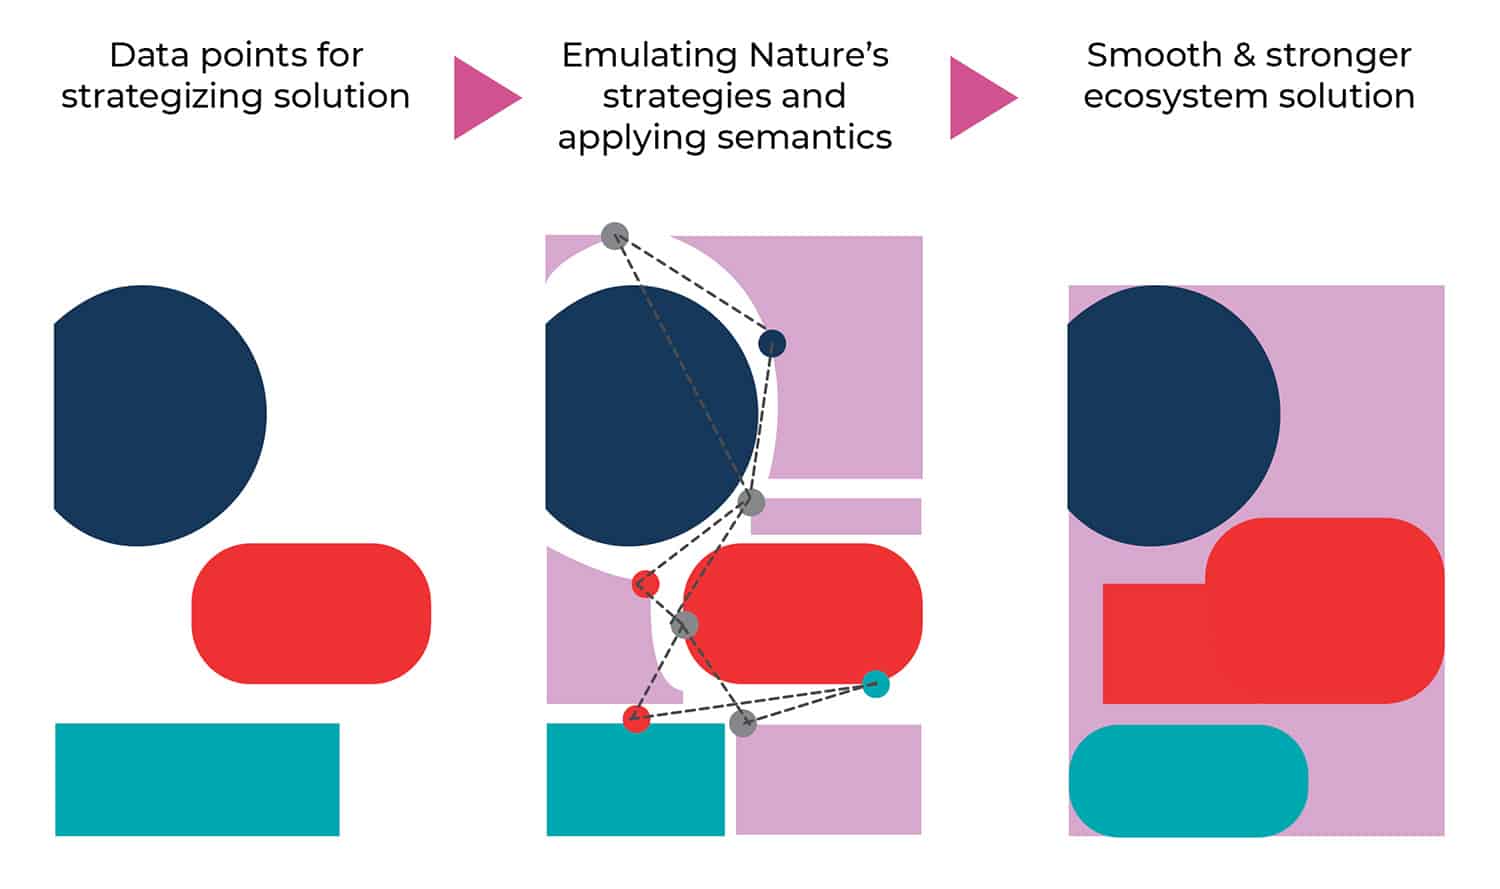 Adding Nature's strategies and applying semantics